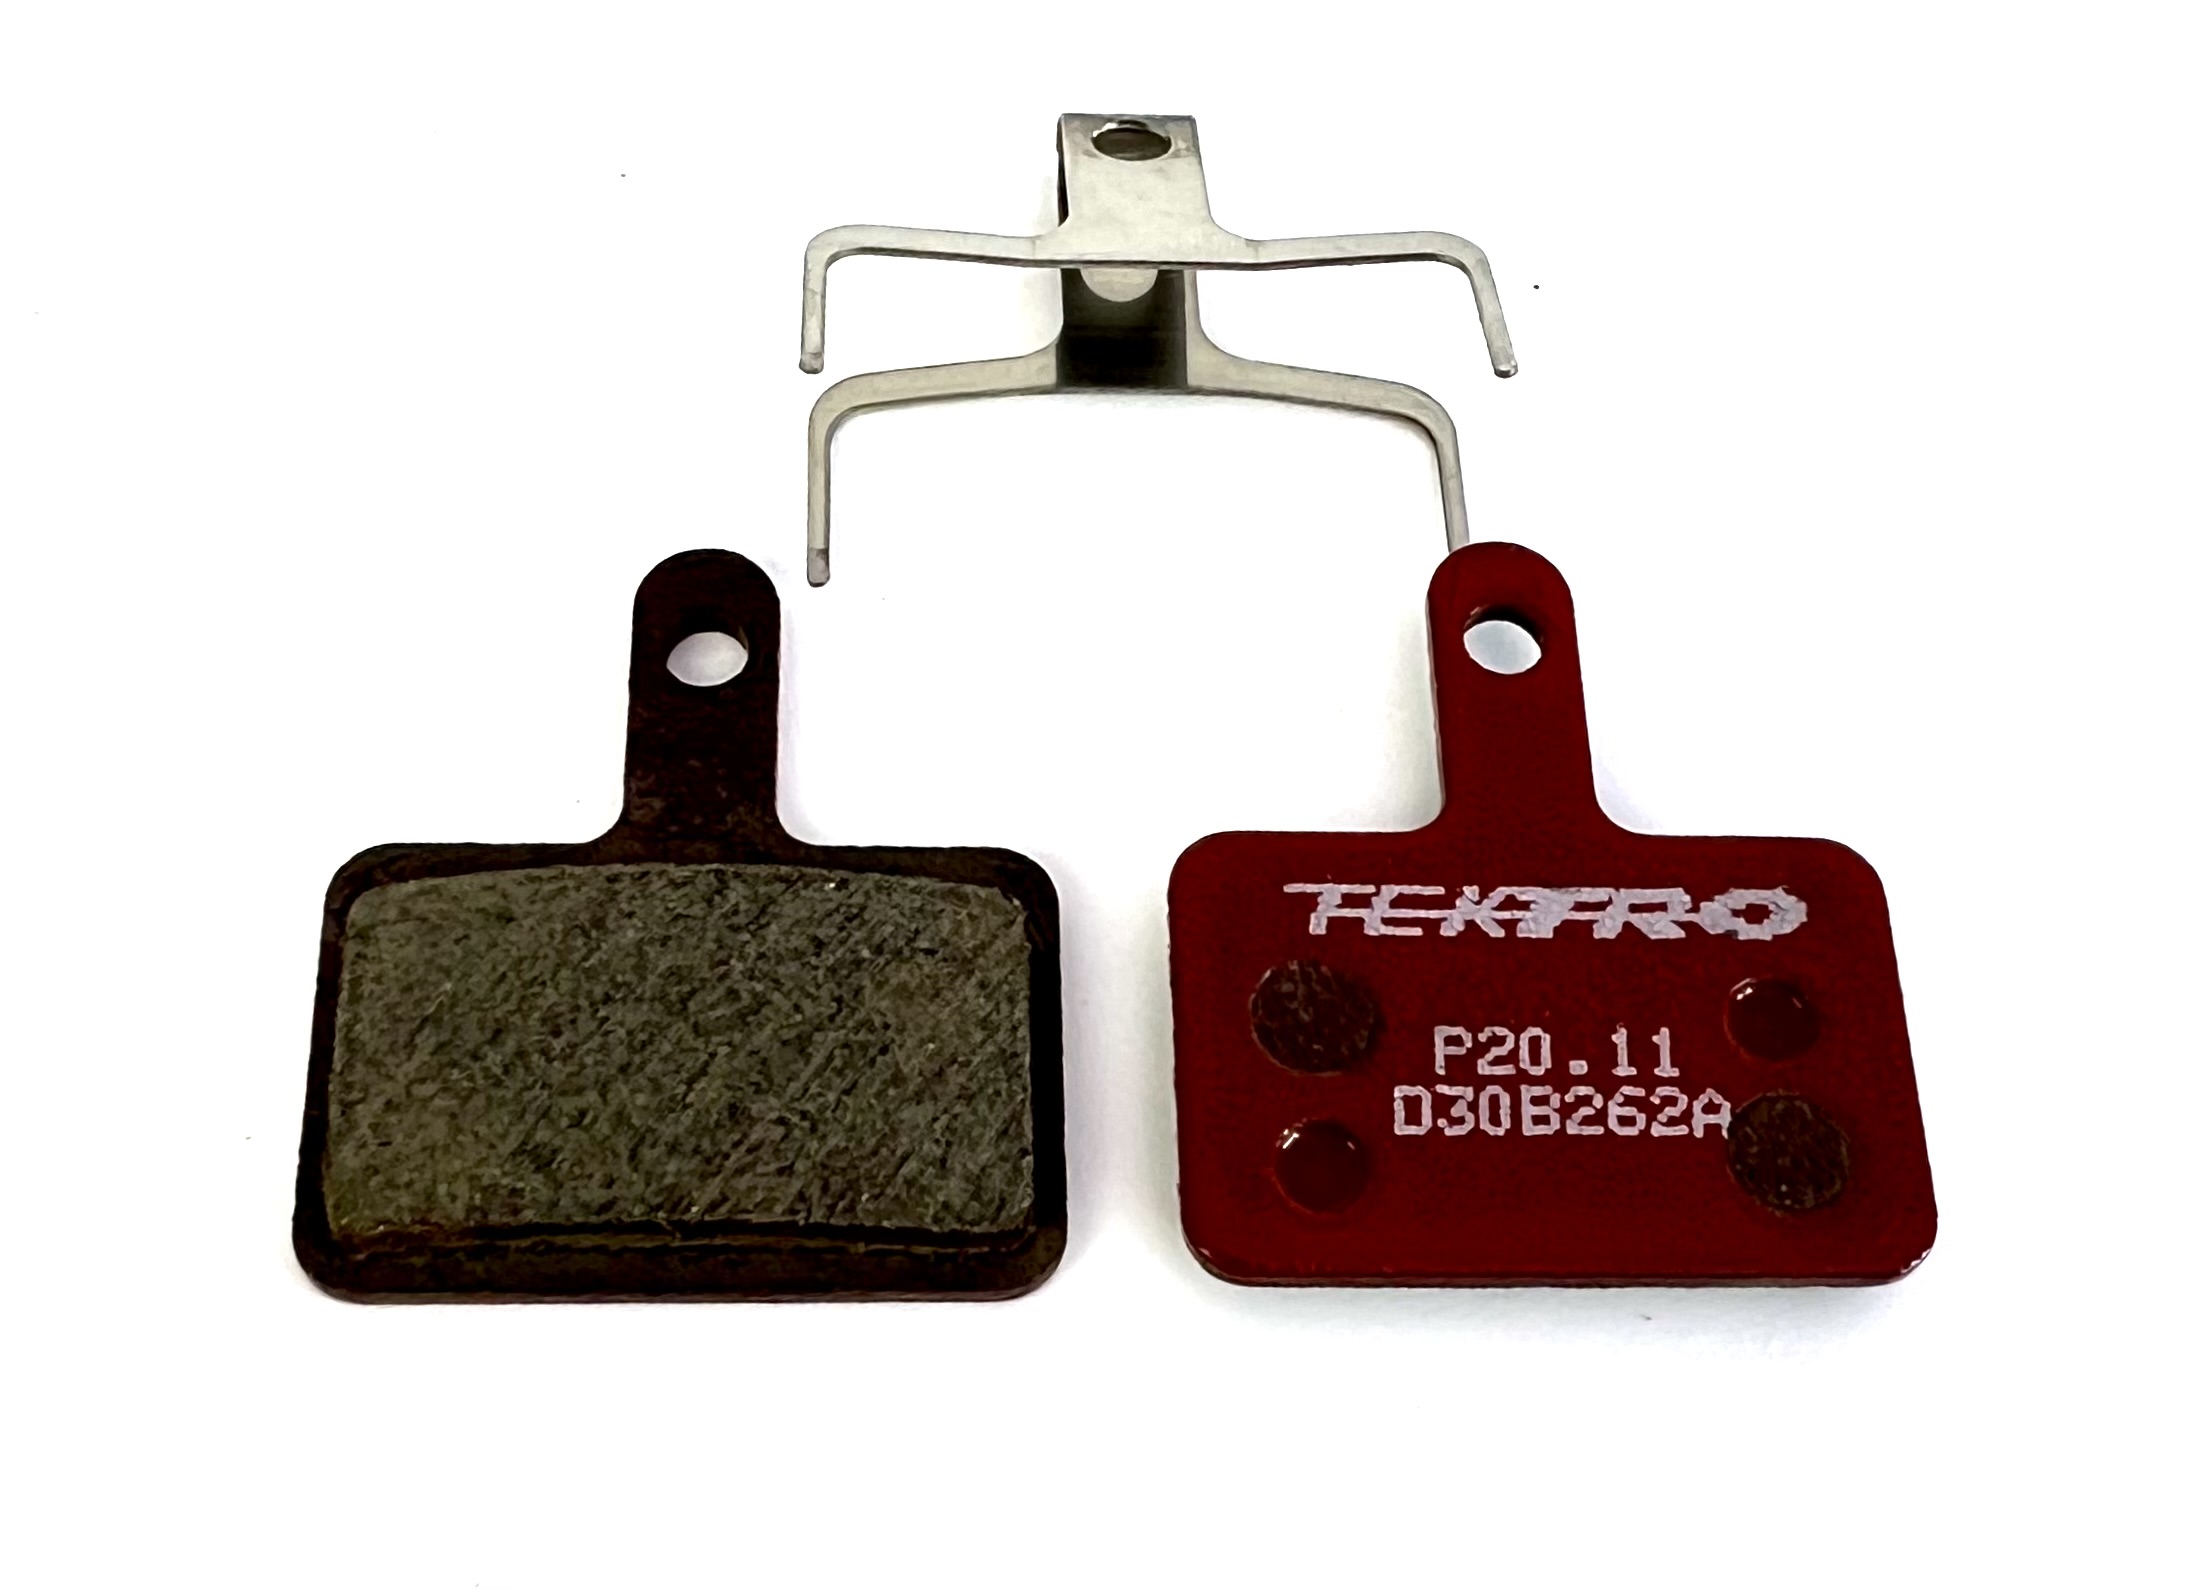 Tektro brake pads ceramic for disc brakes P.20.11 - red